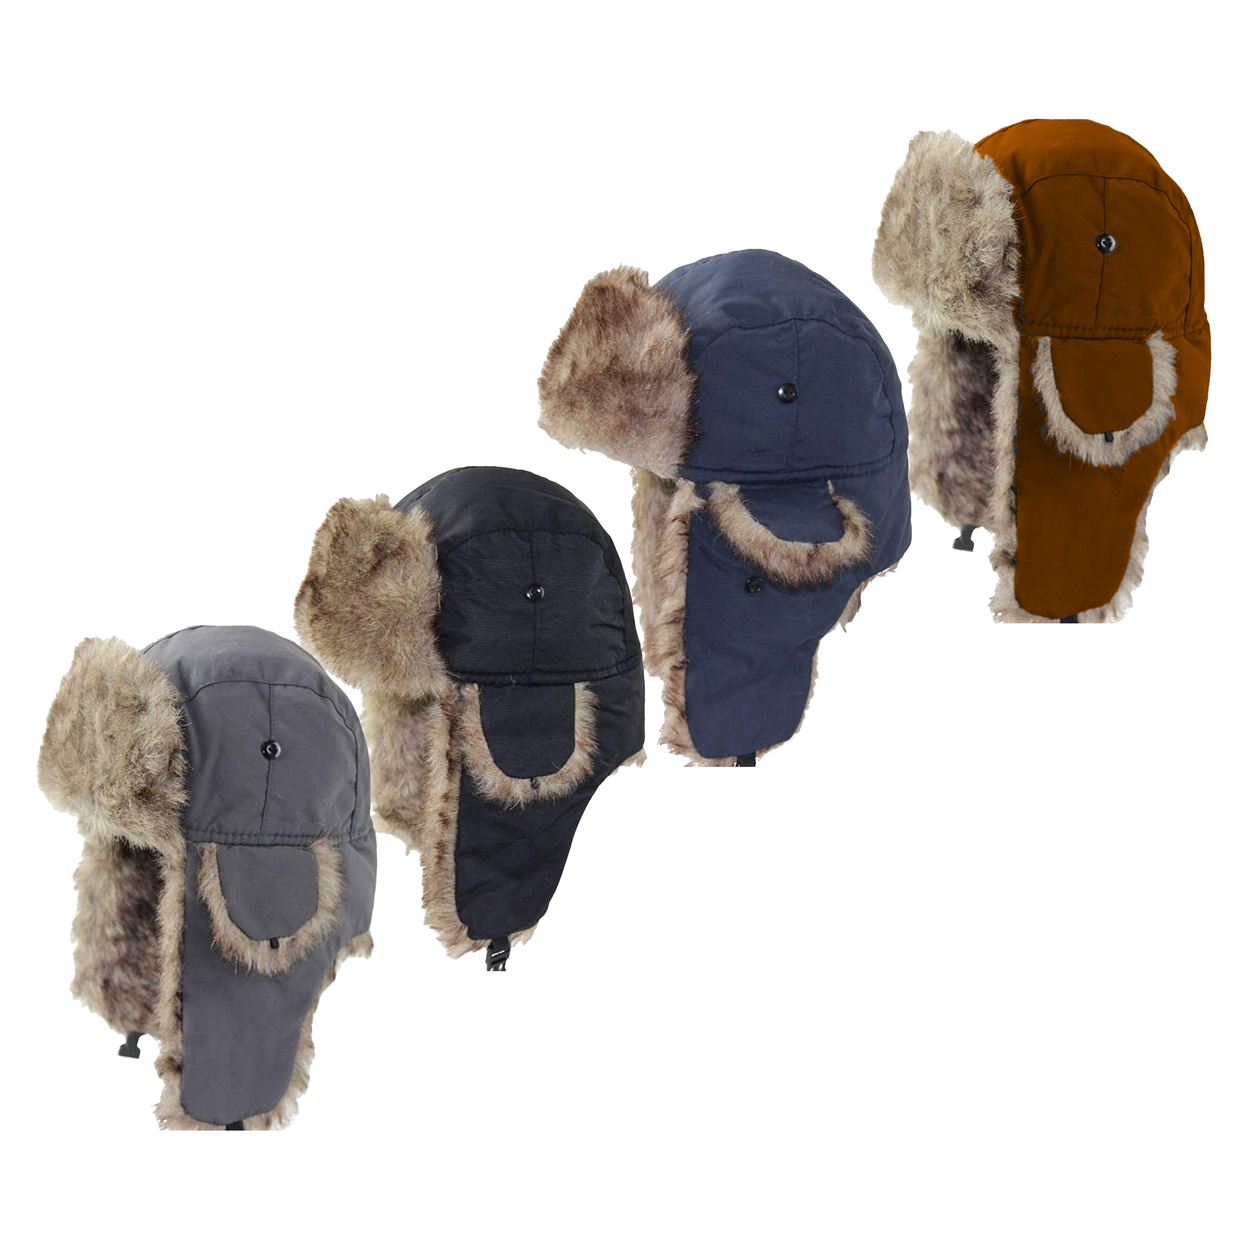 2-Pack: Men's Winter Warm Soft Cozy Russian Ushanka Faux Fur Hat With Ear- Flaps - Black & Navy